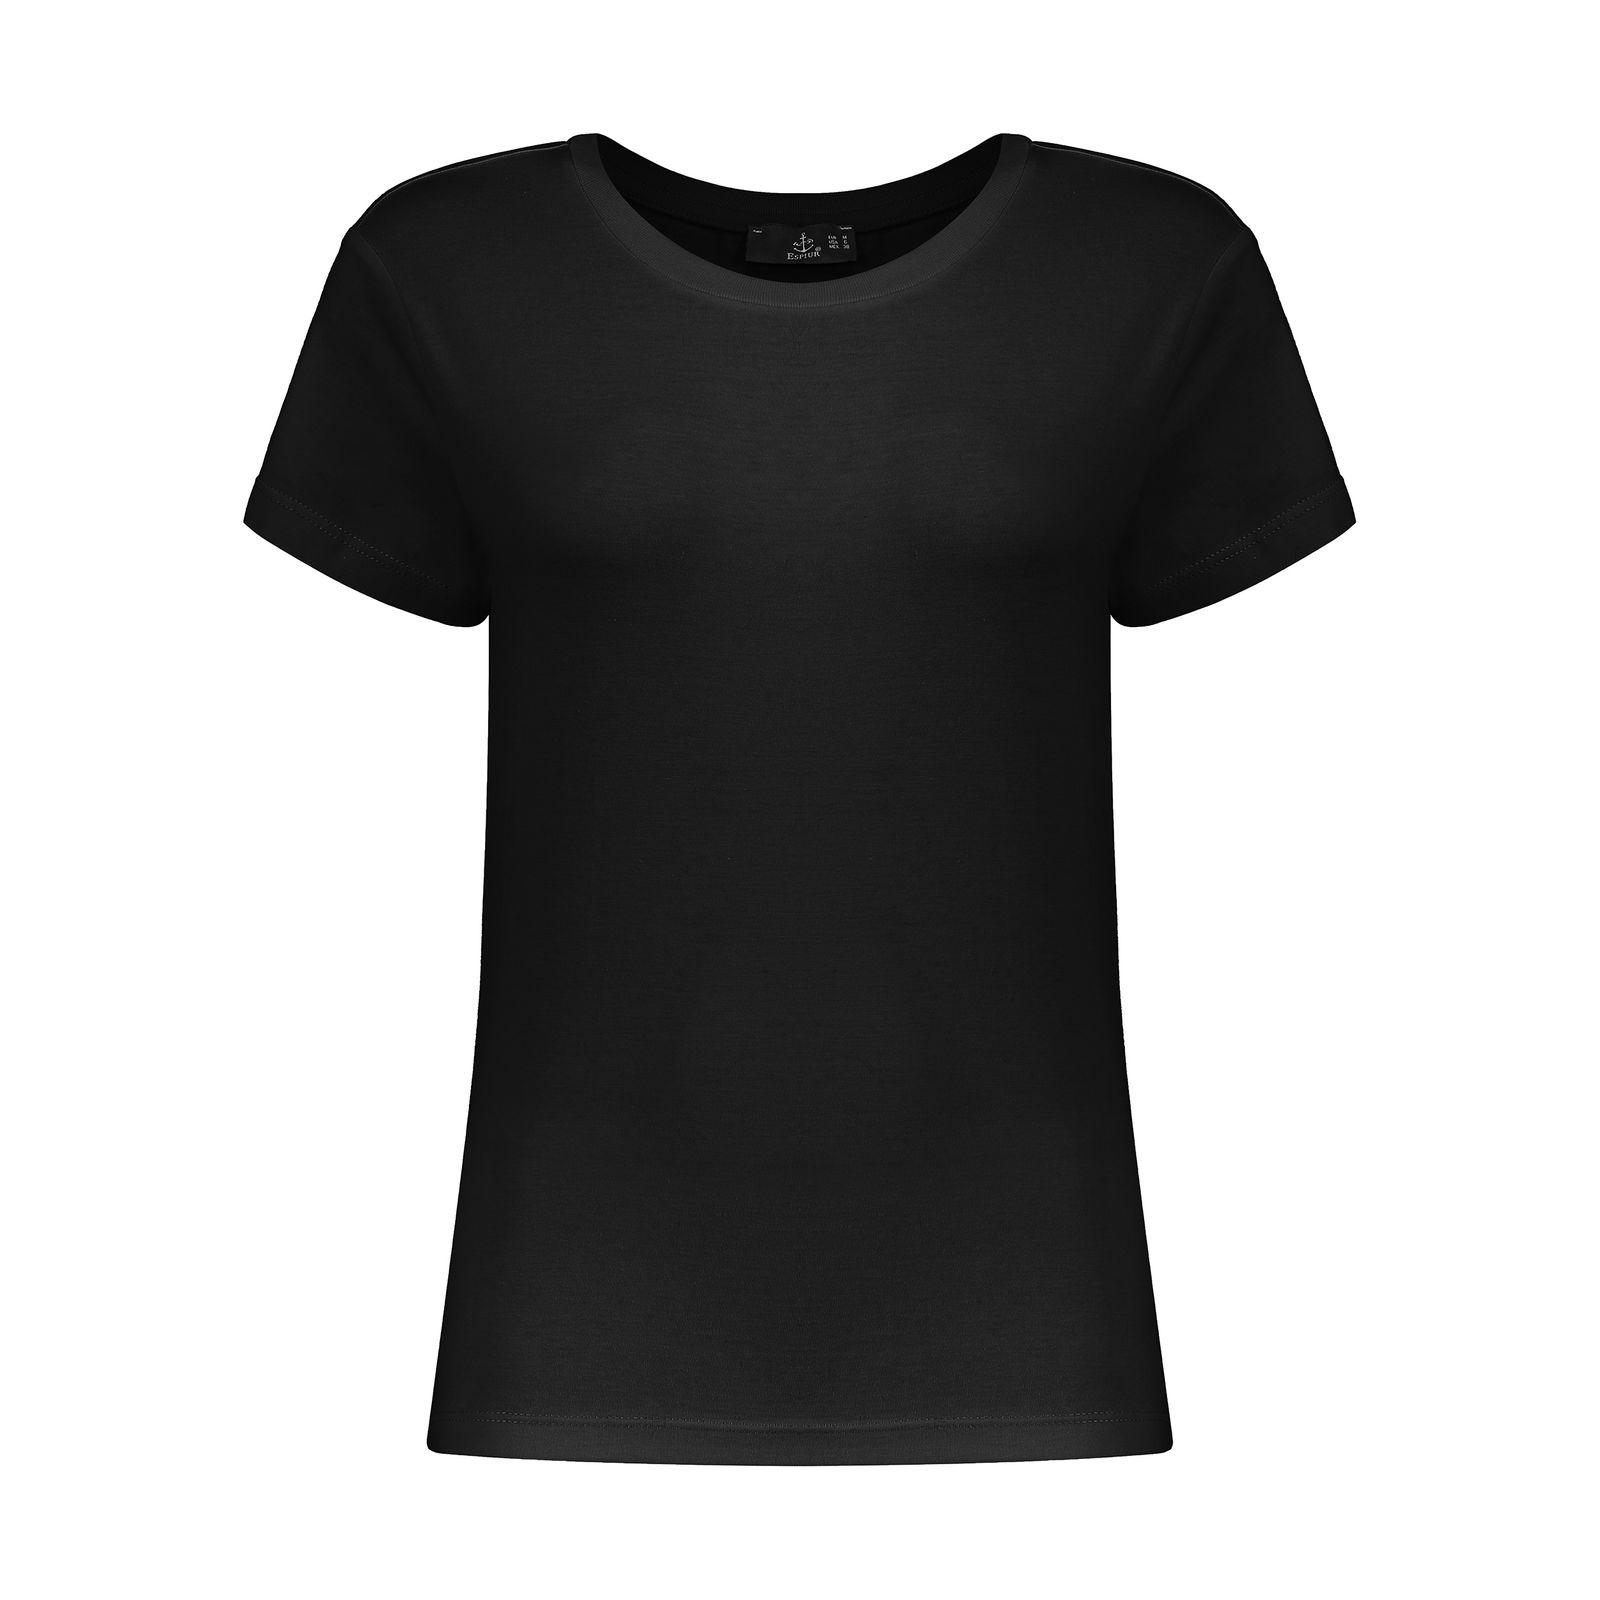 تی شرت زنانه اسپیور مدل 2W01-01 -  - 1